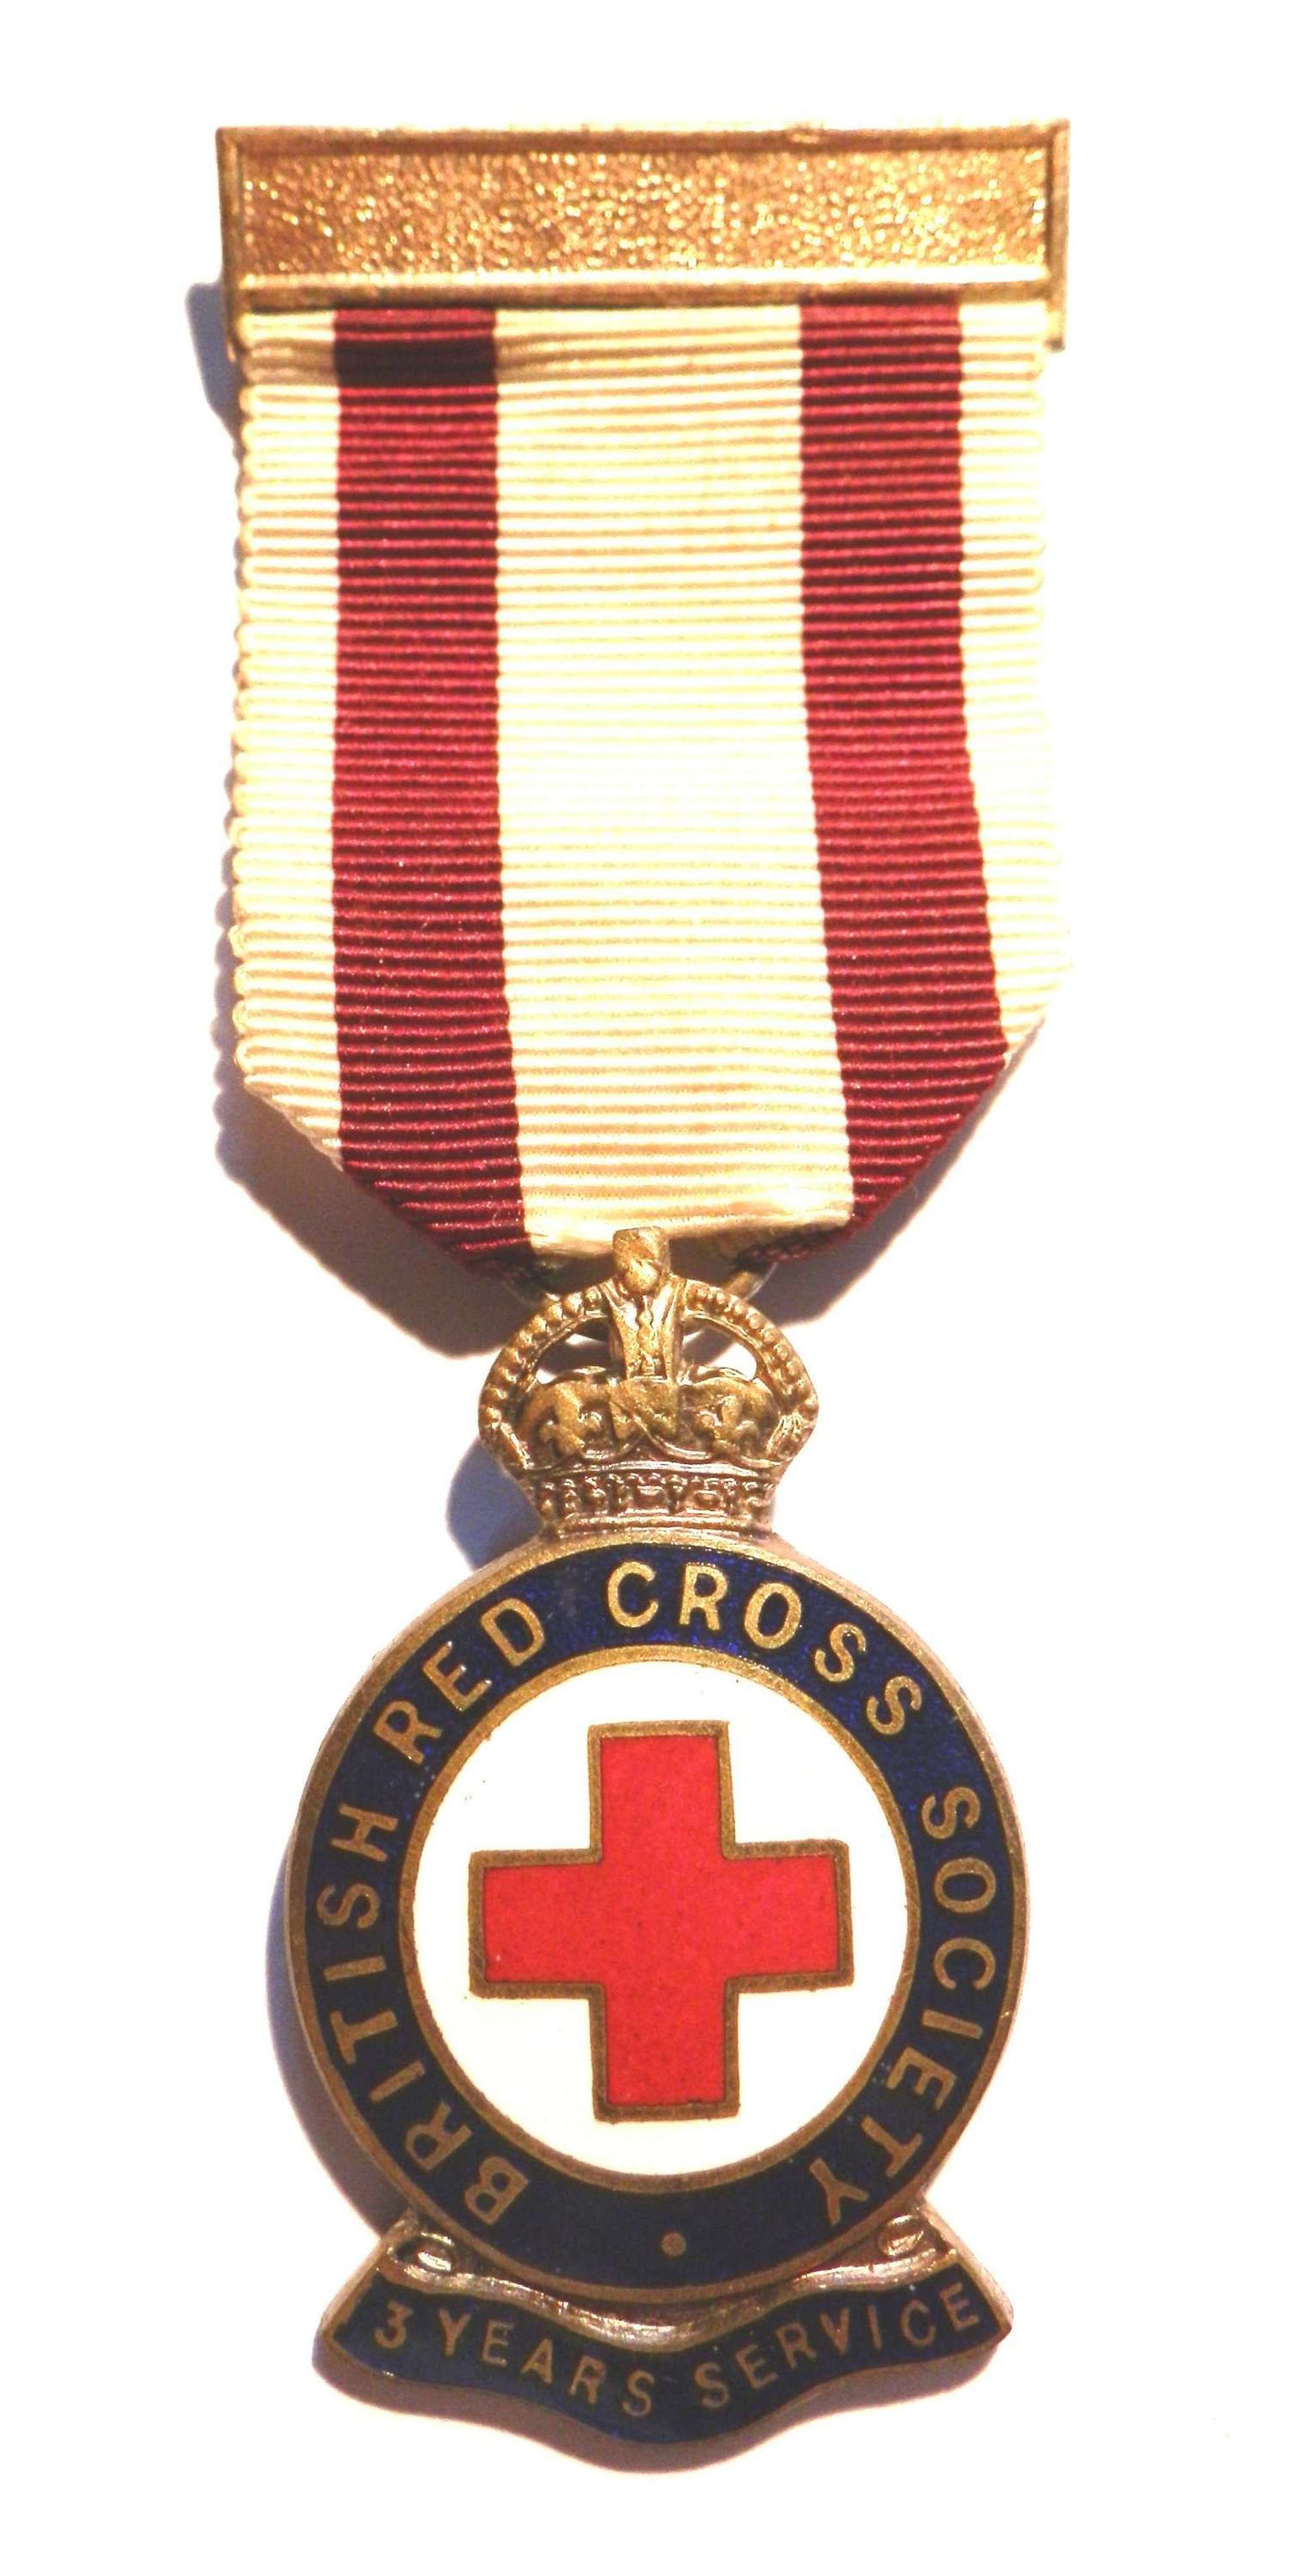 British Red Cross Society, 3 years service.